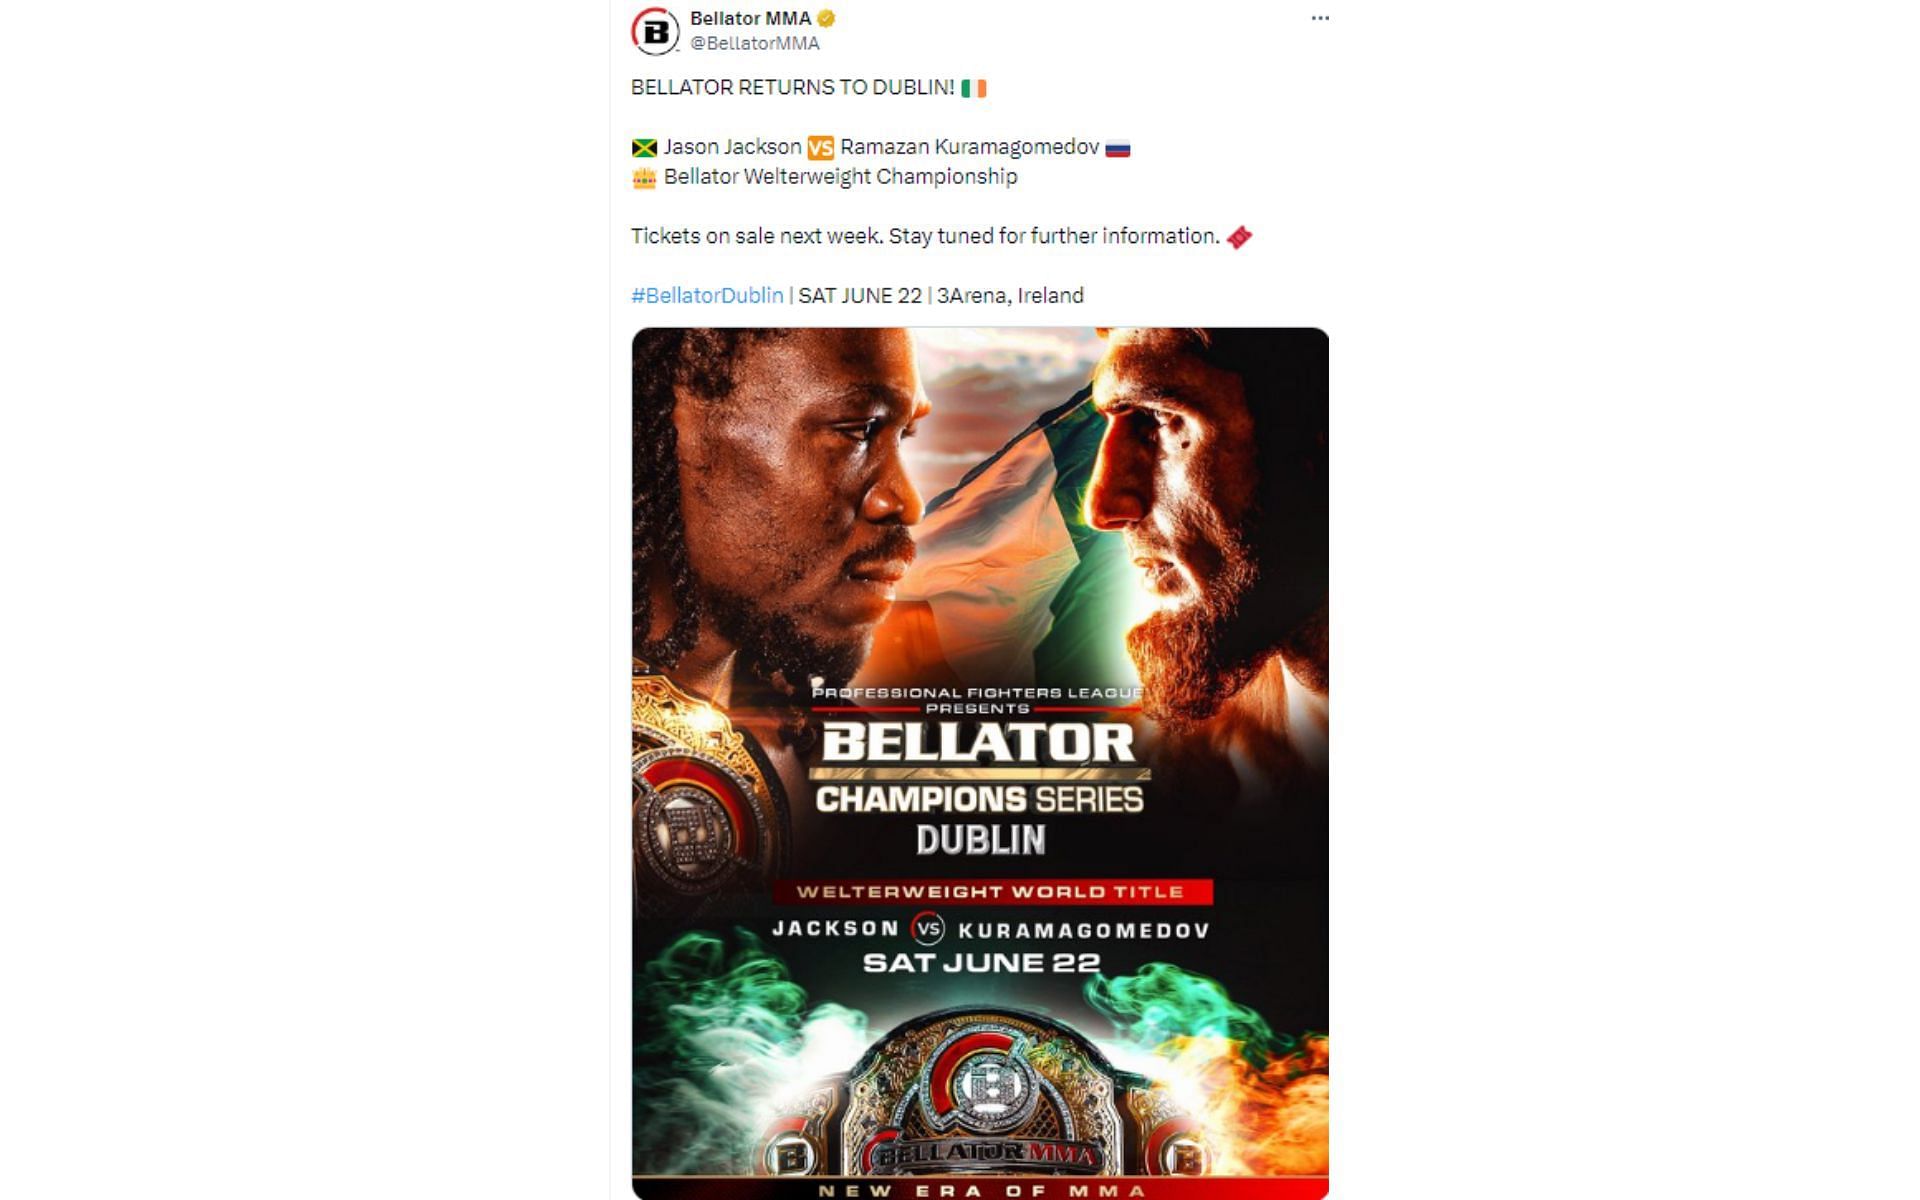 Tweet regarding welterweight title fight announcement [Image courtesy: @BellatorMMA - X]